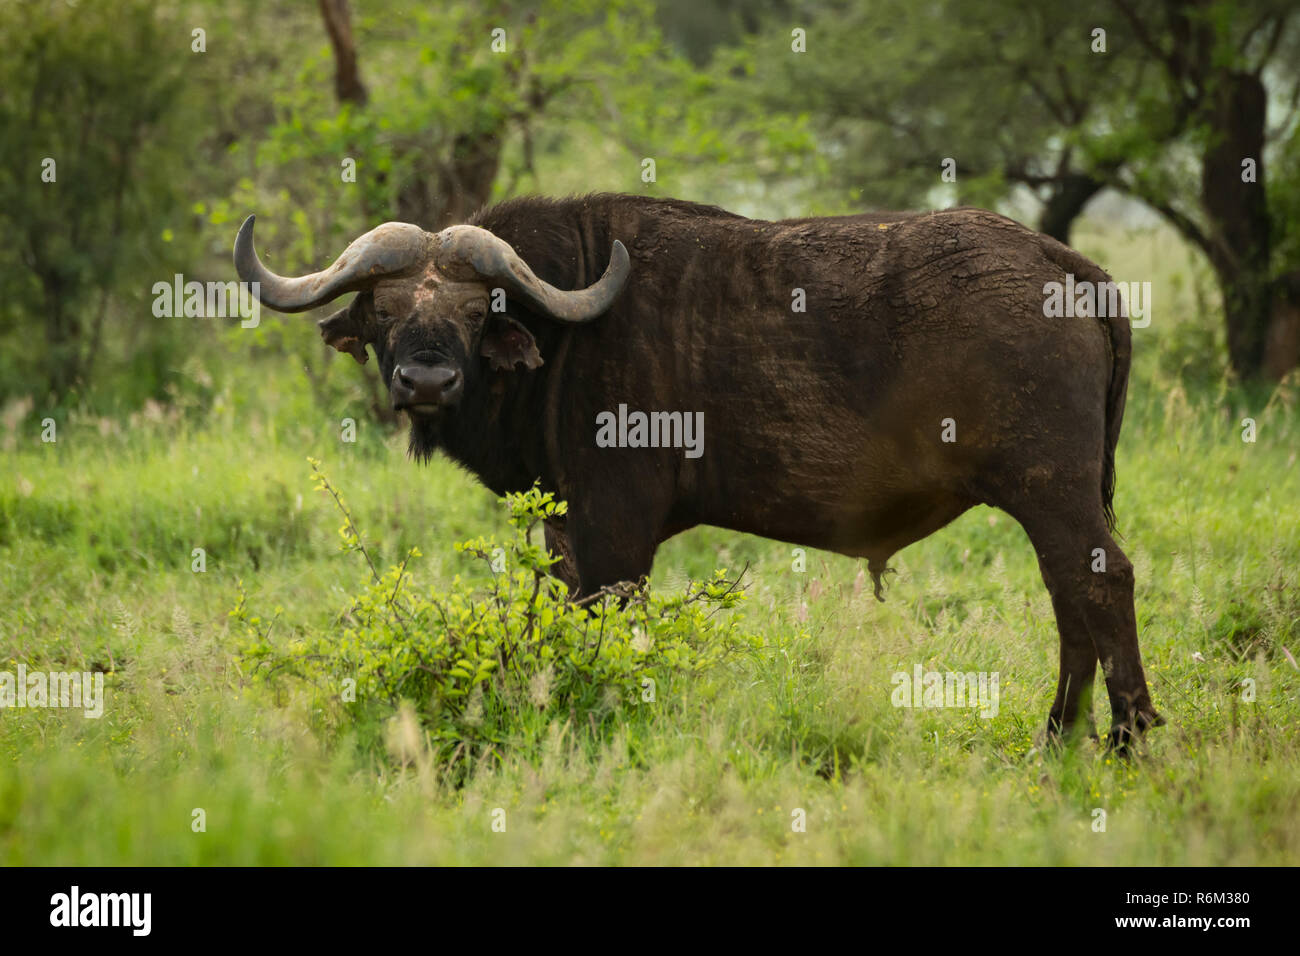 Cape buffalo facing camera in grassy clearing Stock Photo